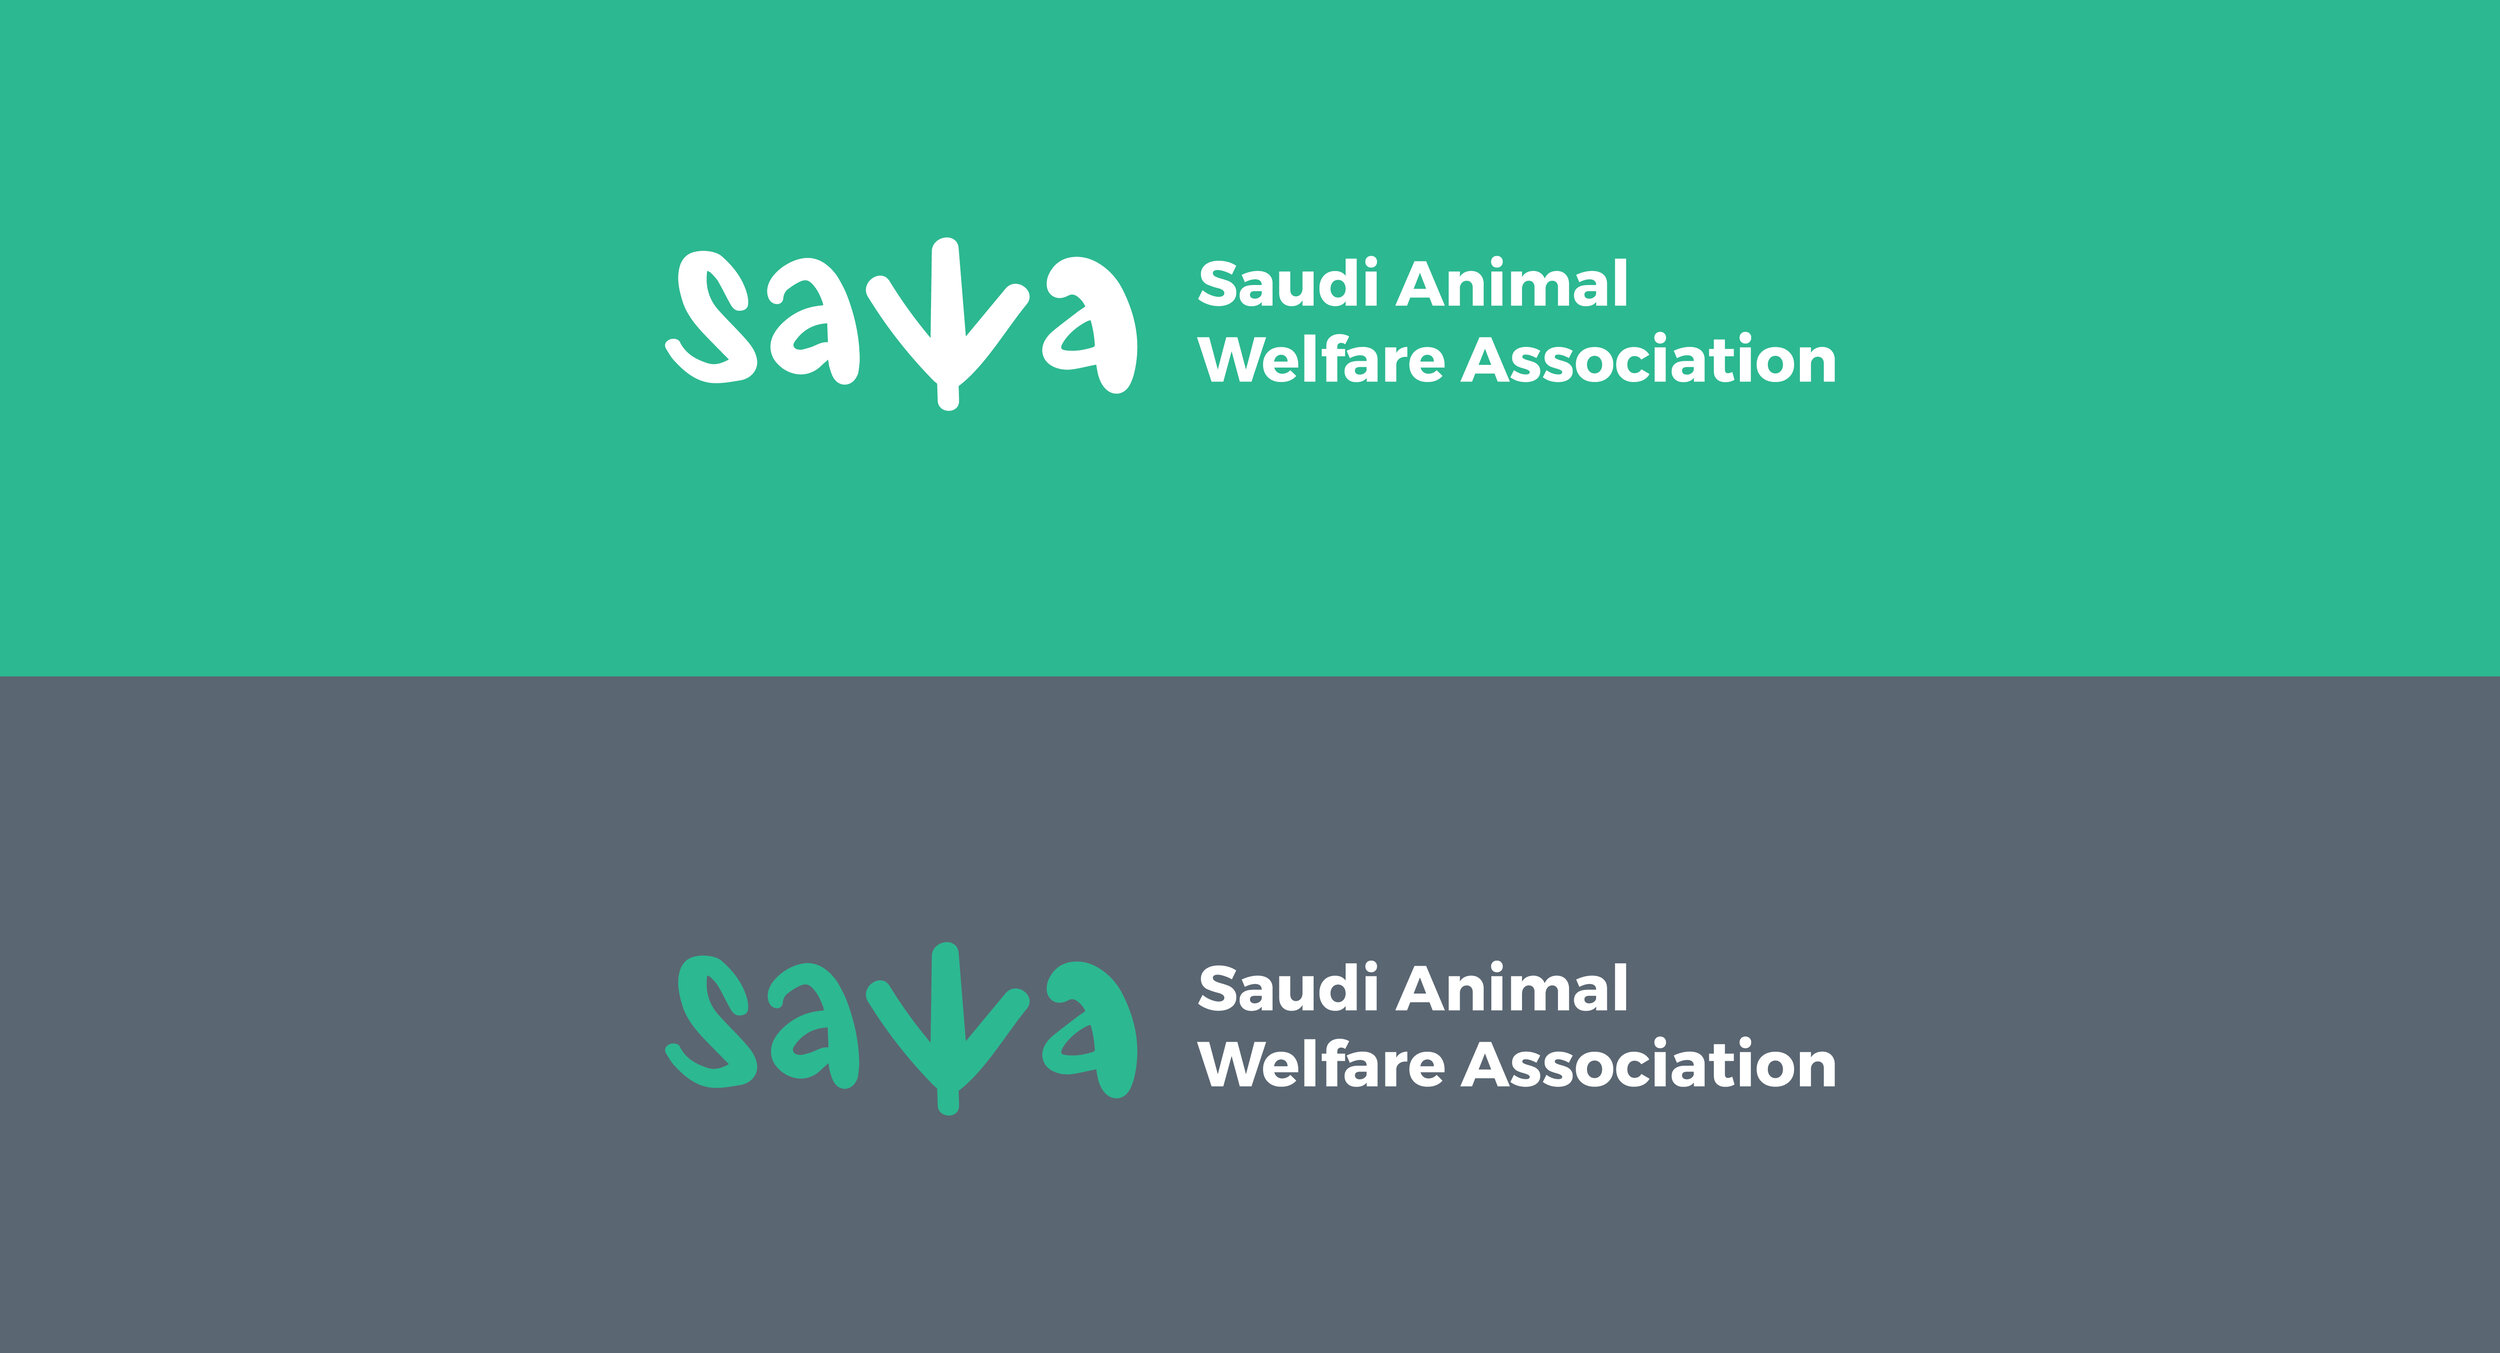 Saudi Animal Welfare Association